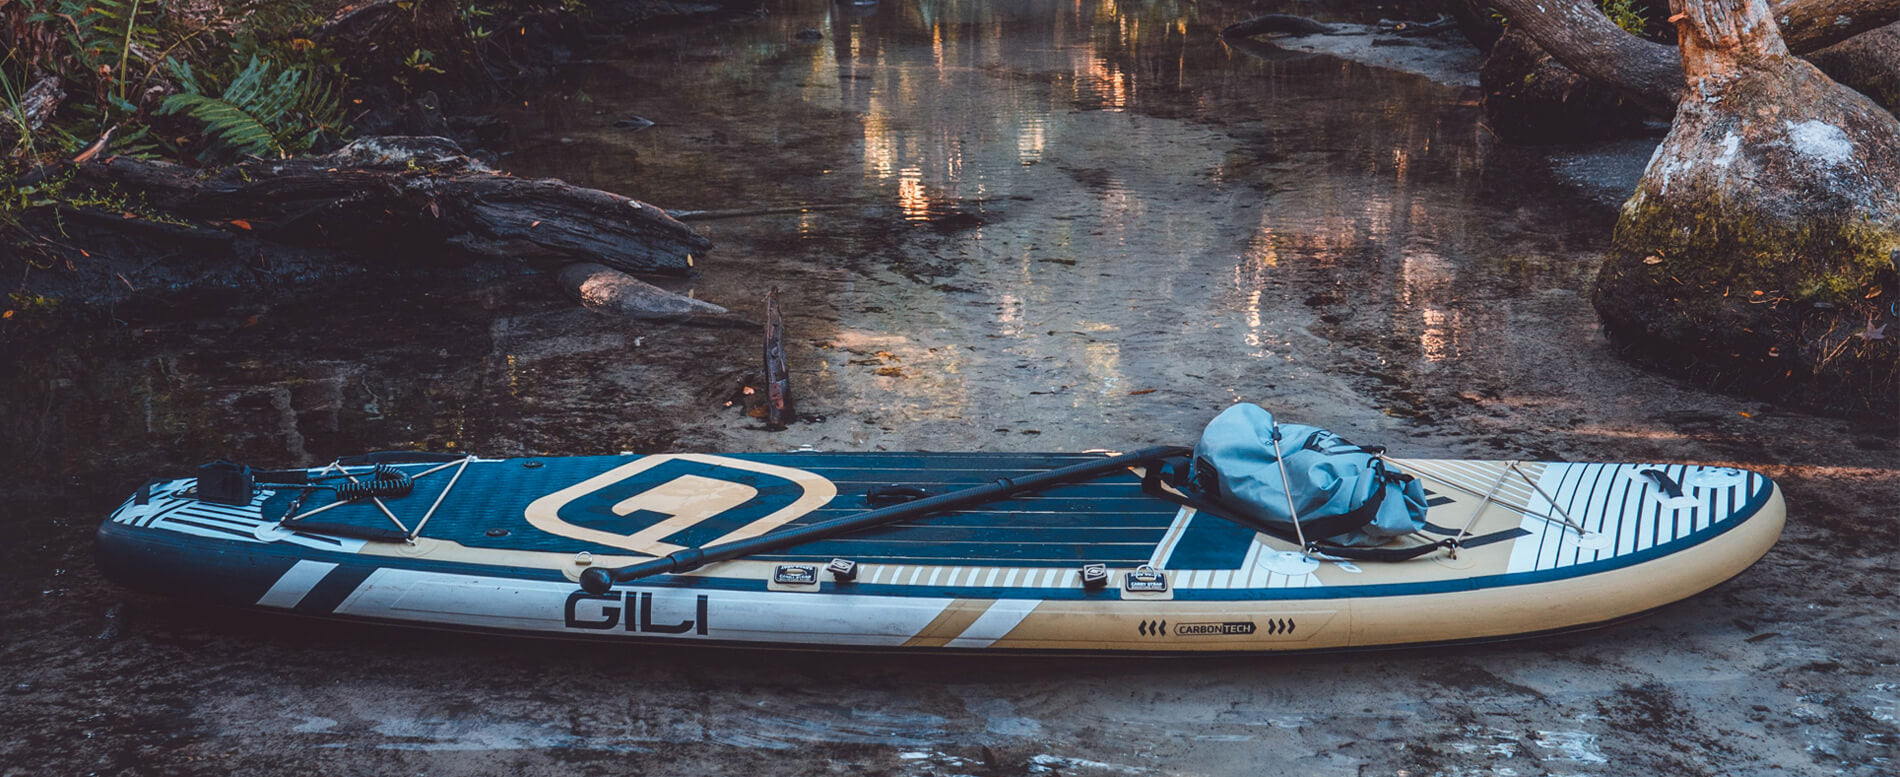 Gili Meno best river paddle boards